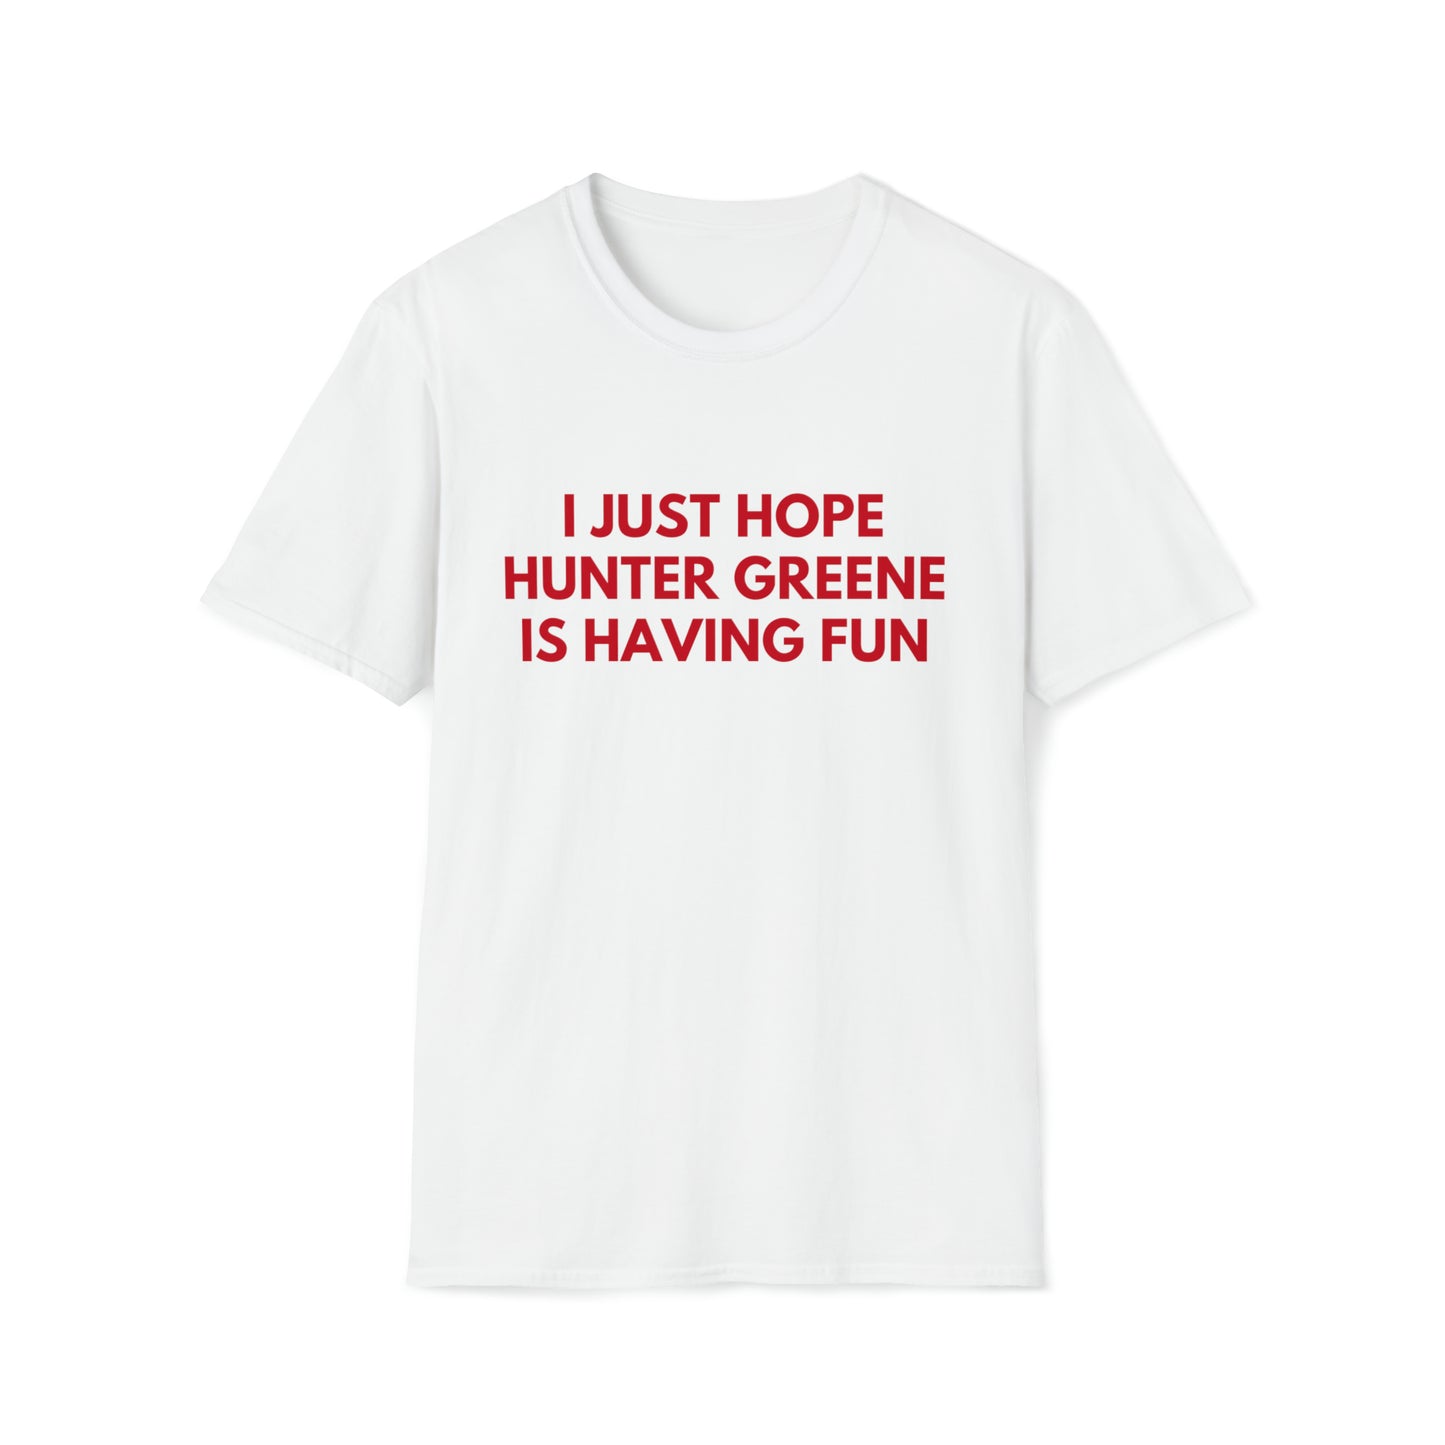 Hunter Greene Having Fun - Unisex T-shirt